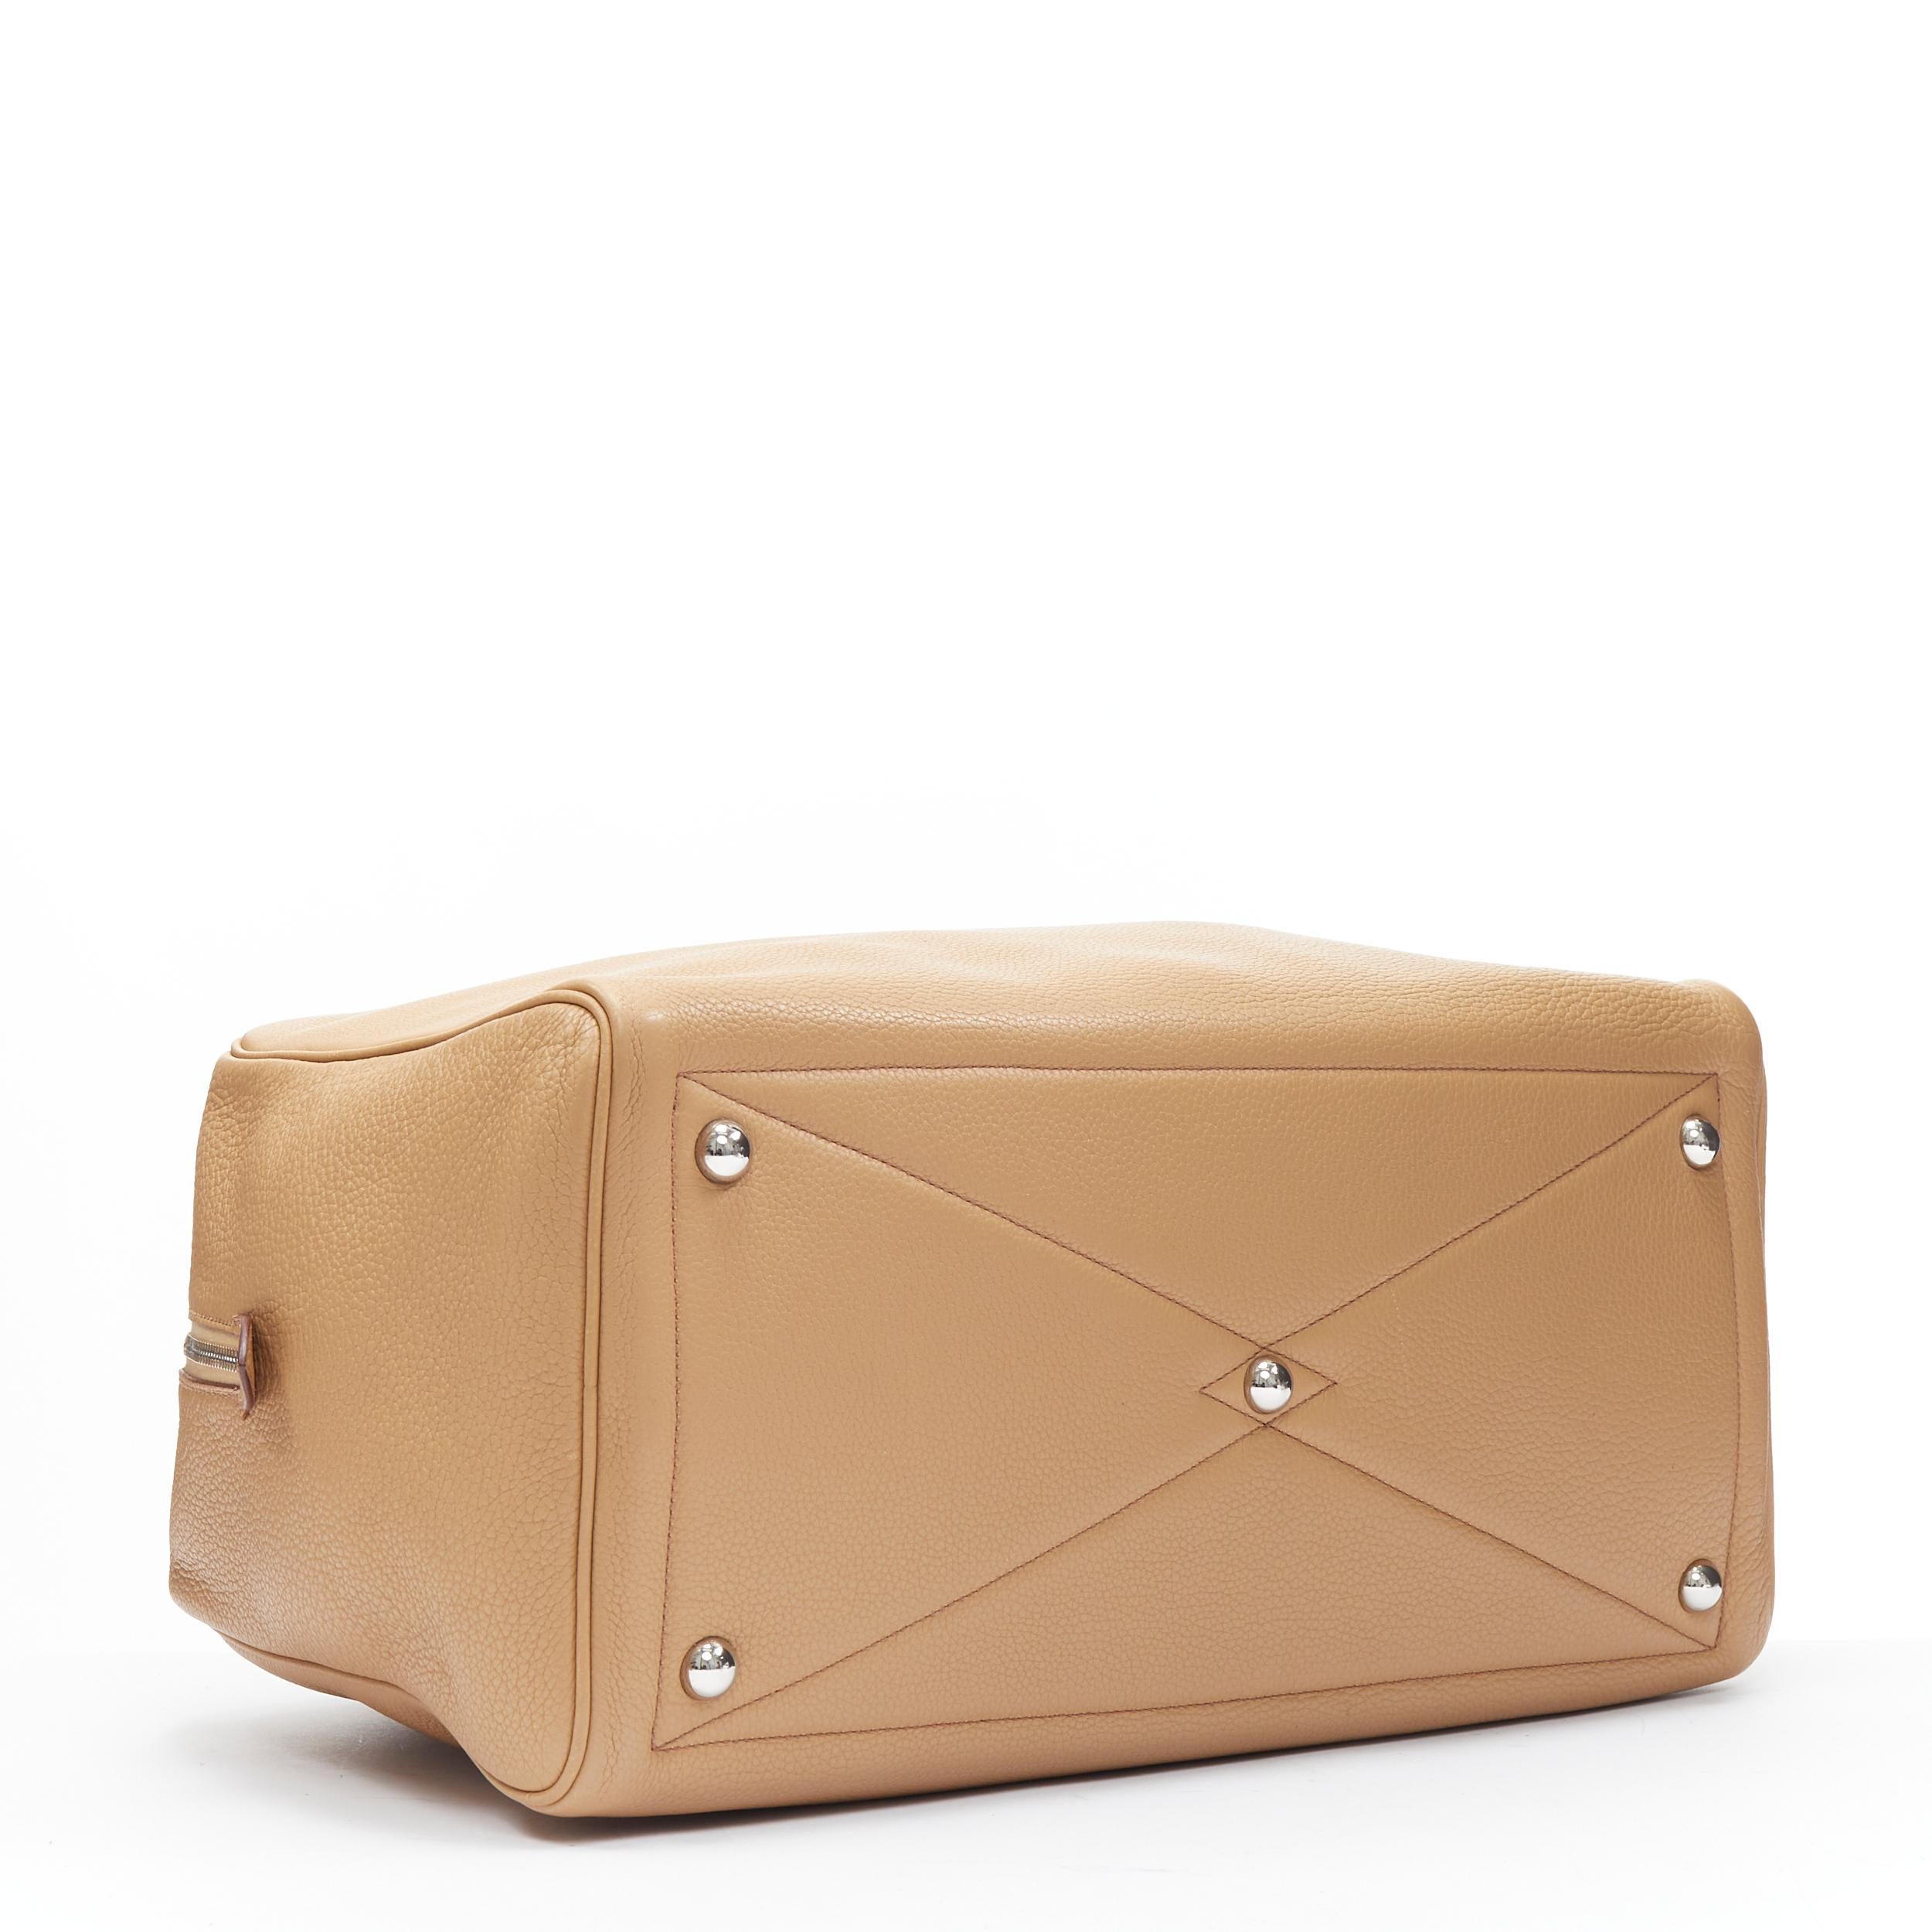 HERMES VIctoria 40 tan brown calf leather top handle travel satchel bag 1